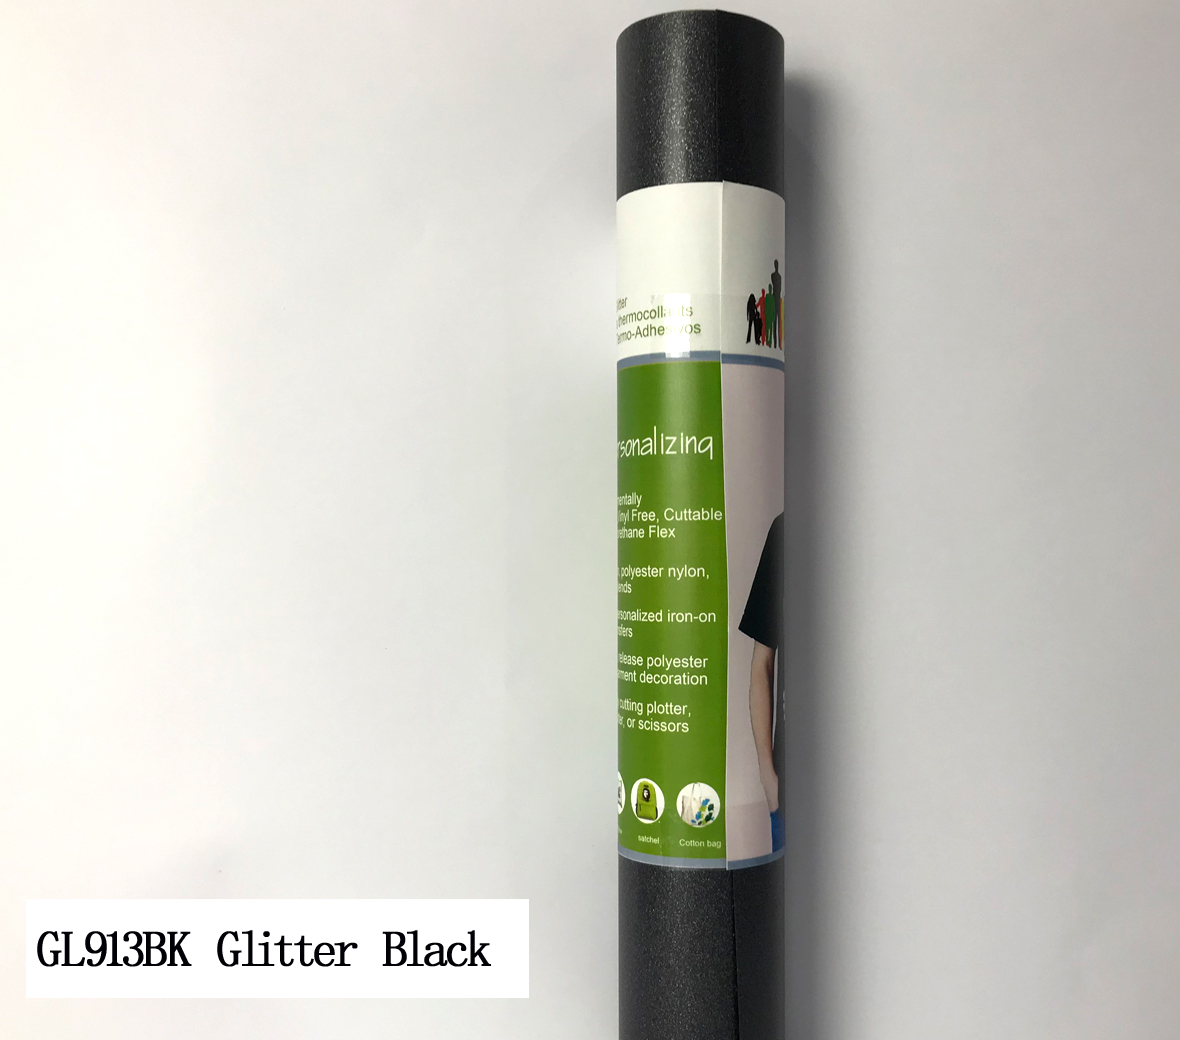 GL913BK Glitter Black